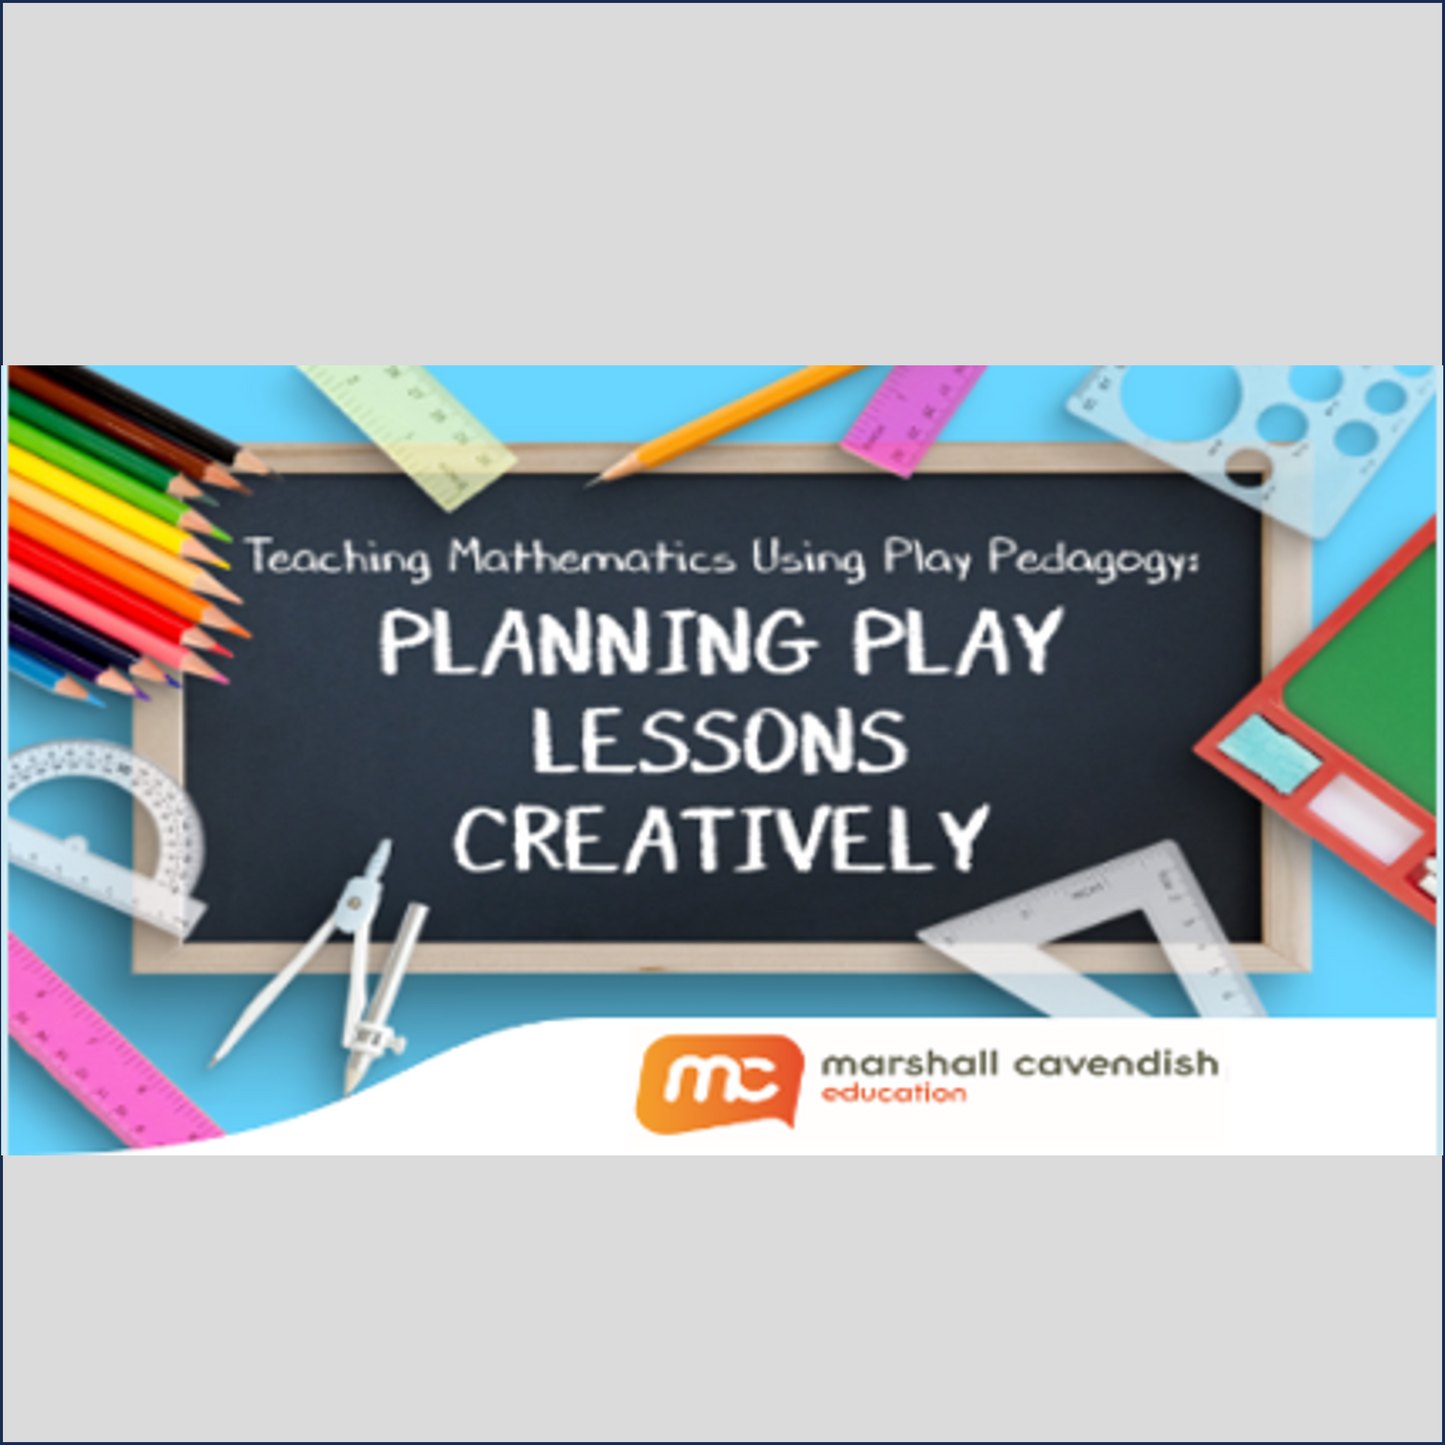 Teaching Mathematics Using Play Pedagogy: Planning Play Lessons Creatively